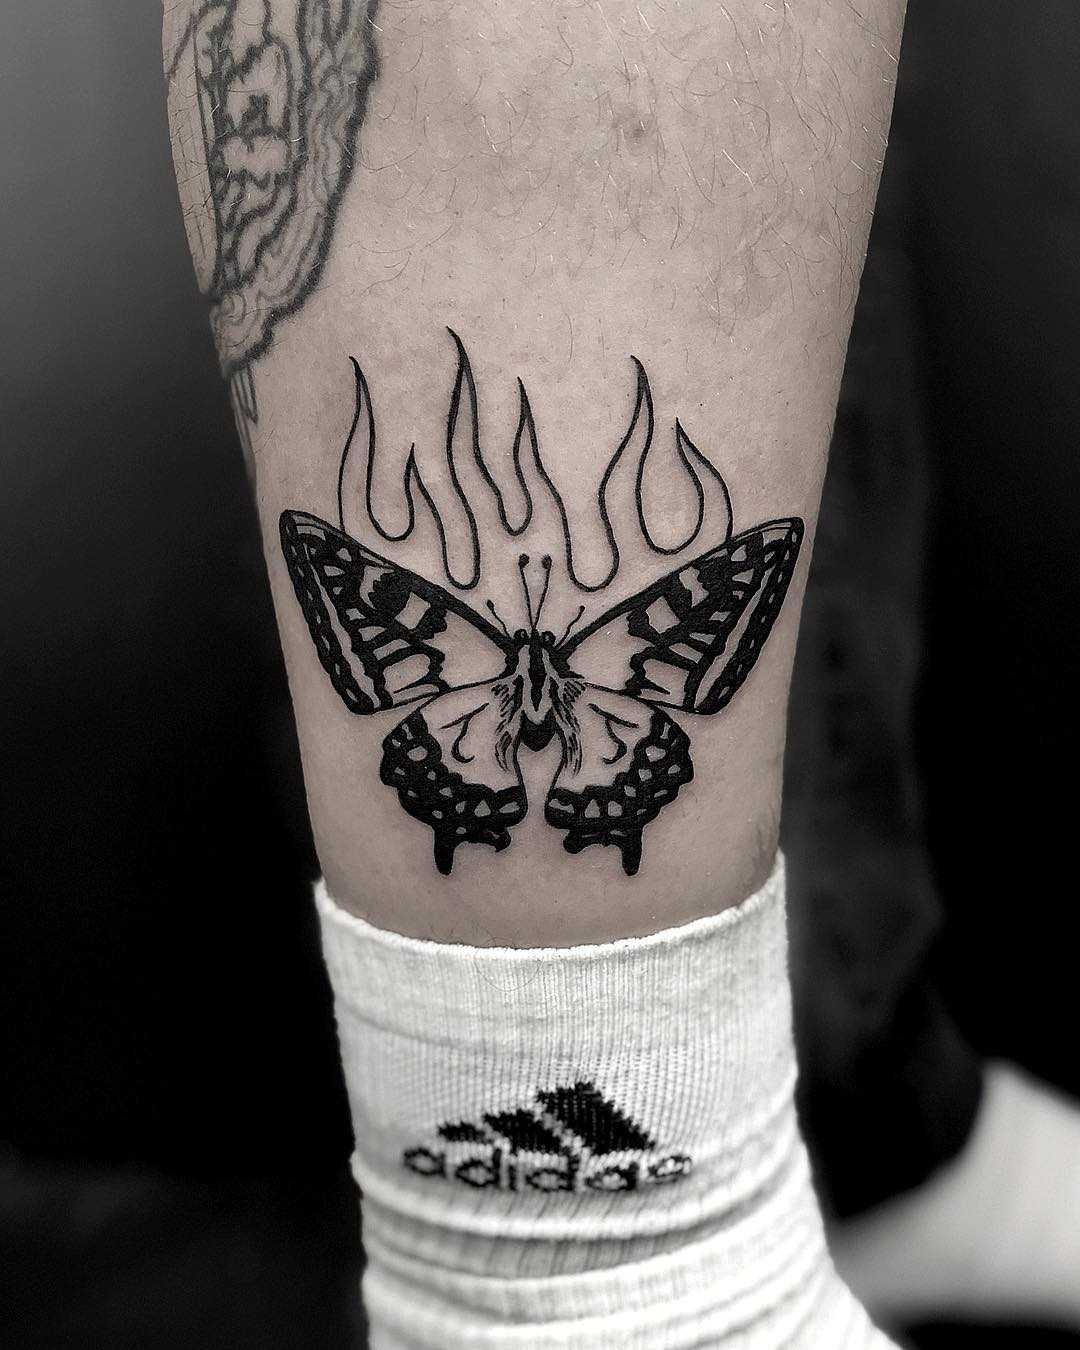 Burning butterfly tattoo by Loz McLean